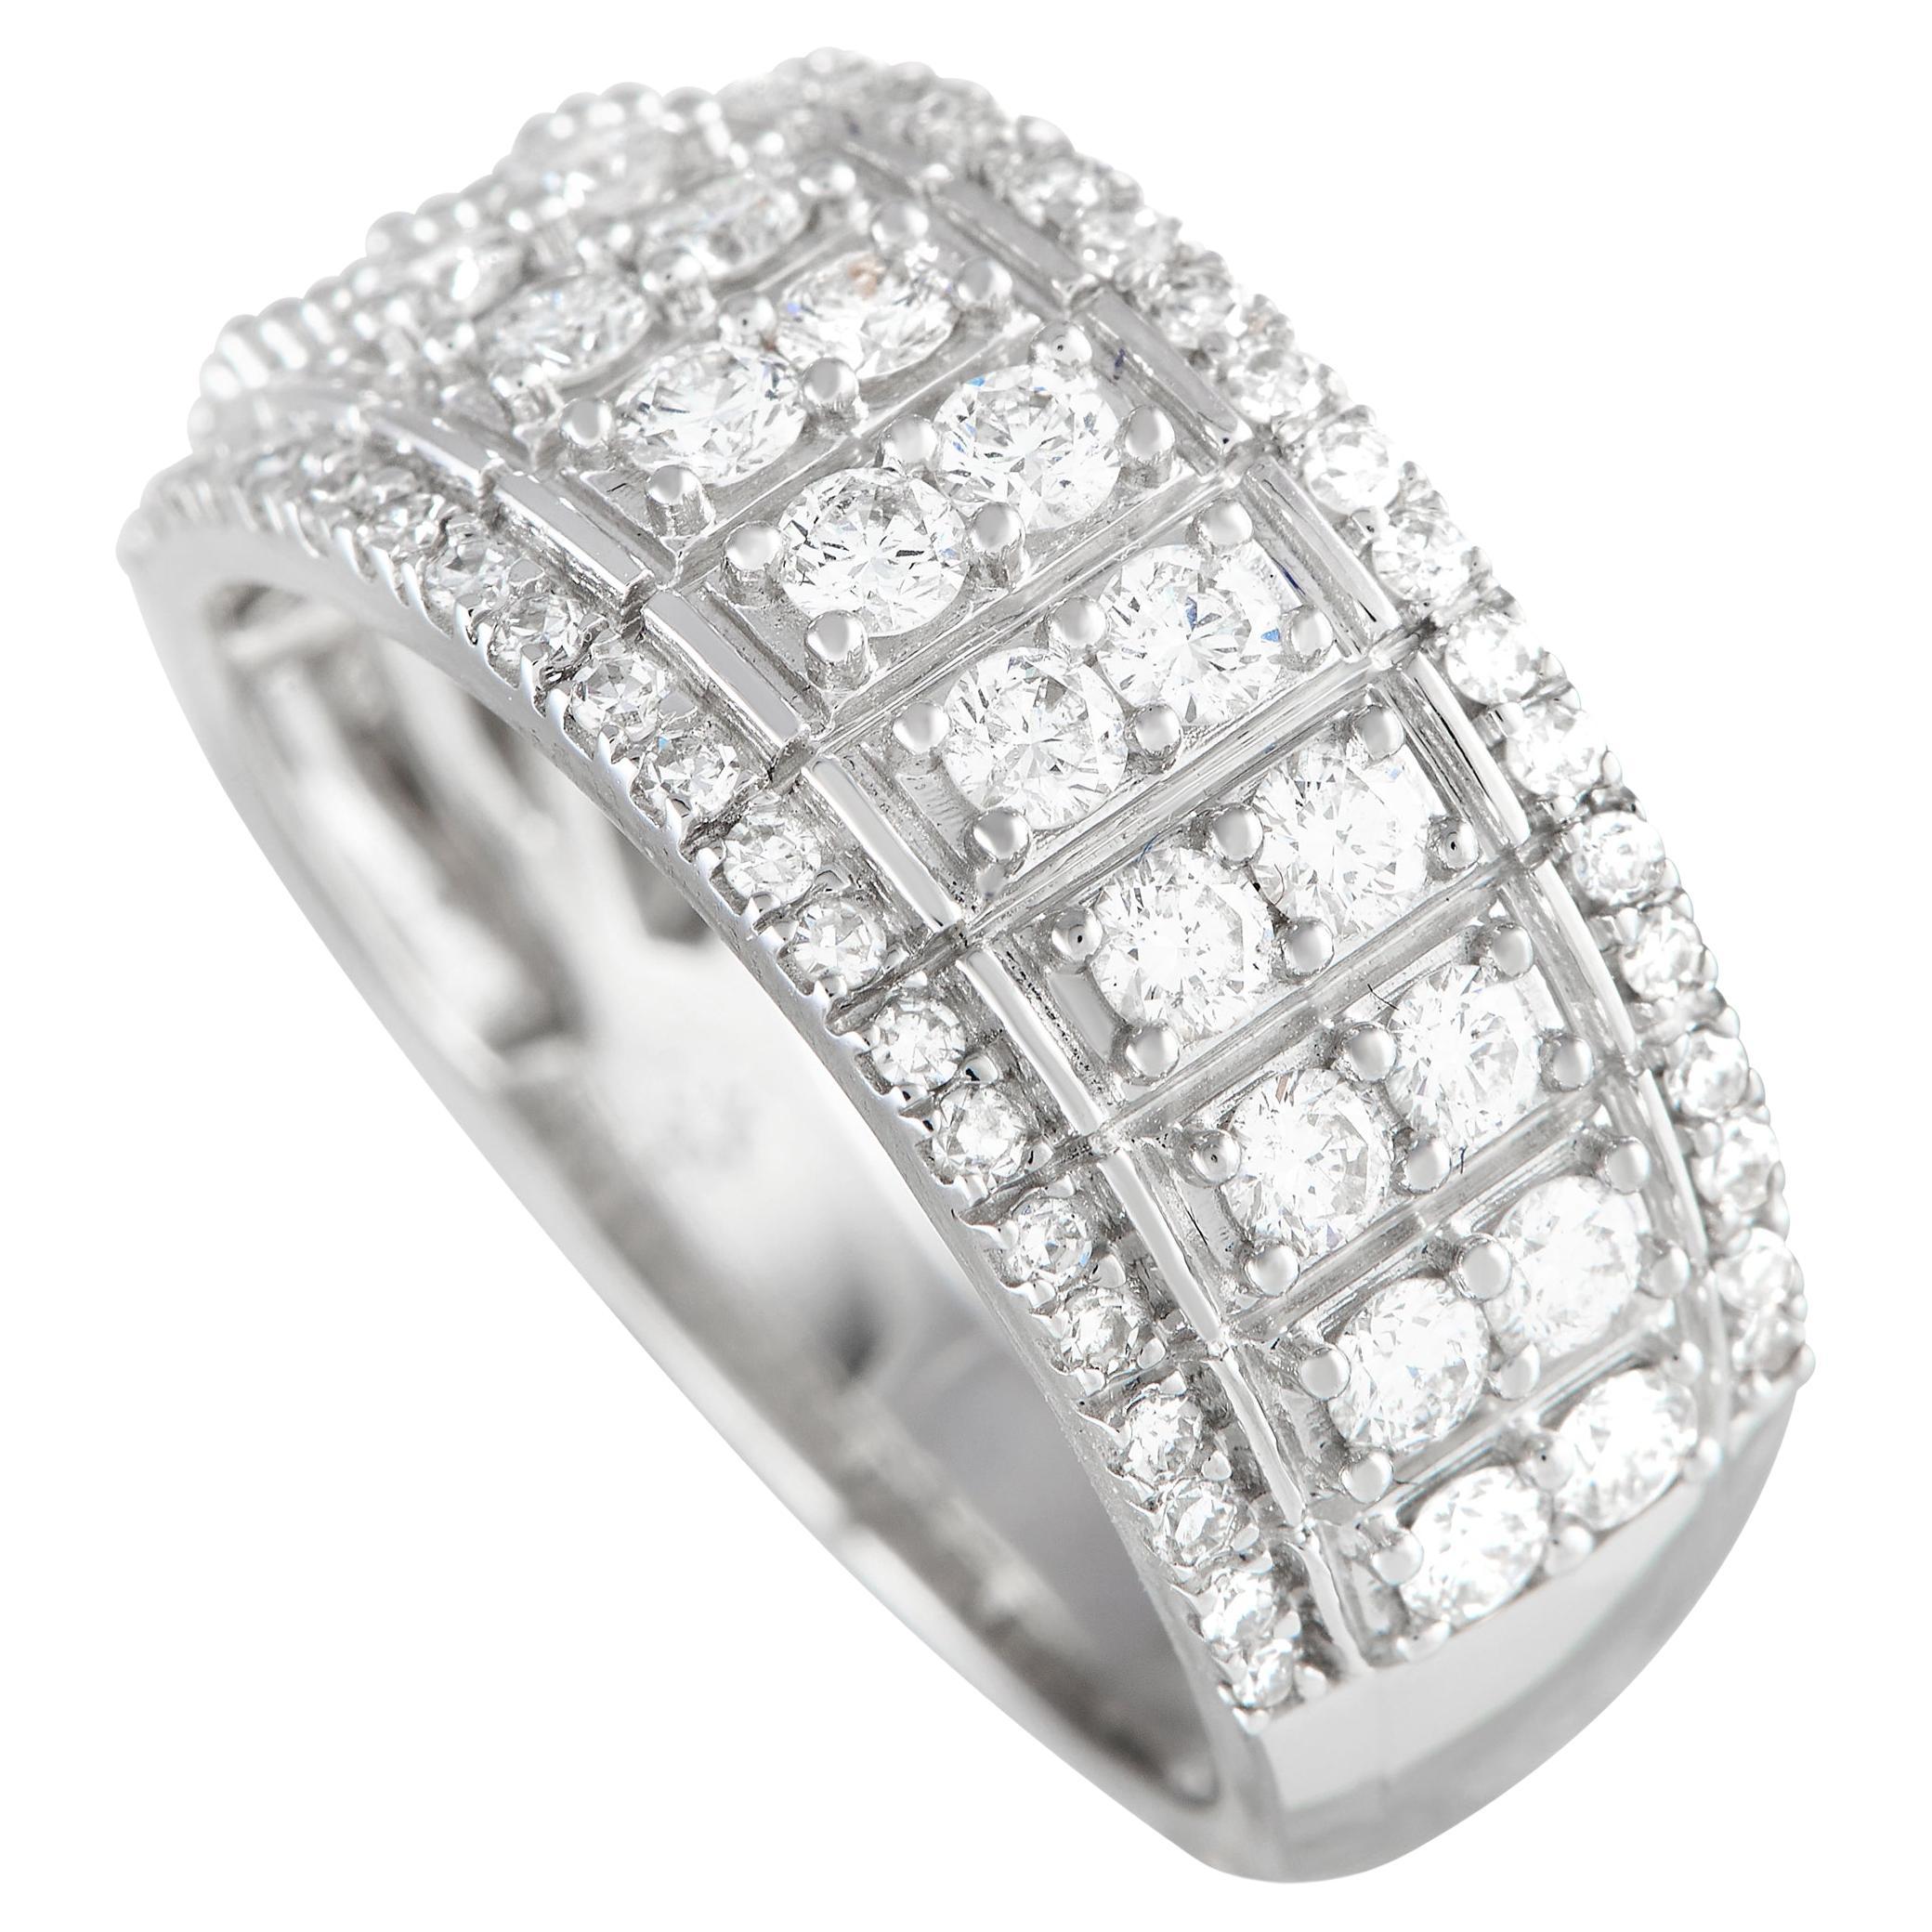 LB Exclusive 14k White Gold 1.0 Carat Diamond Ring